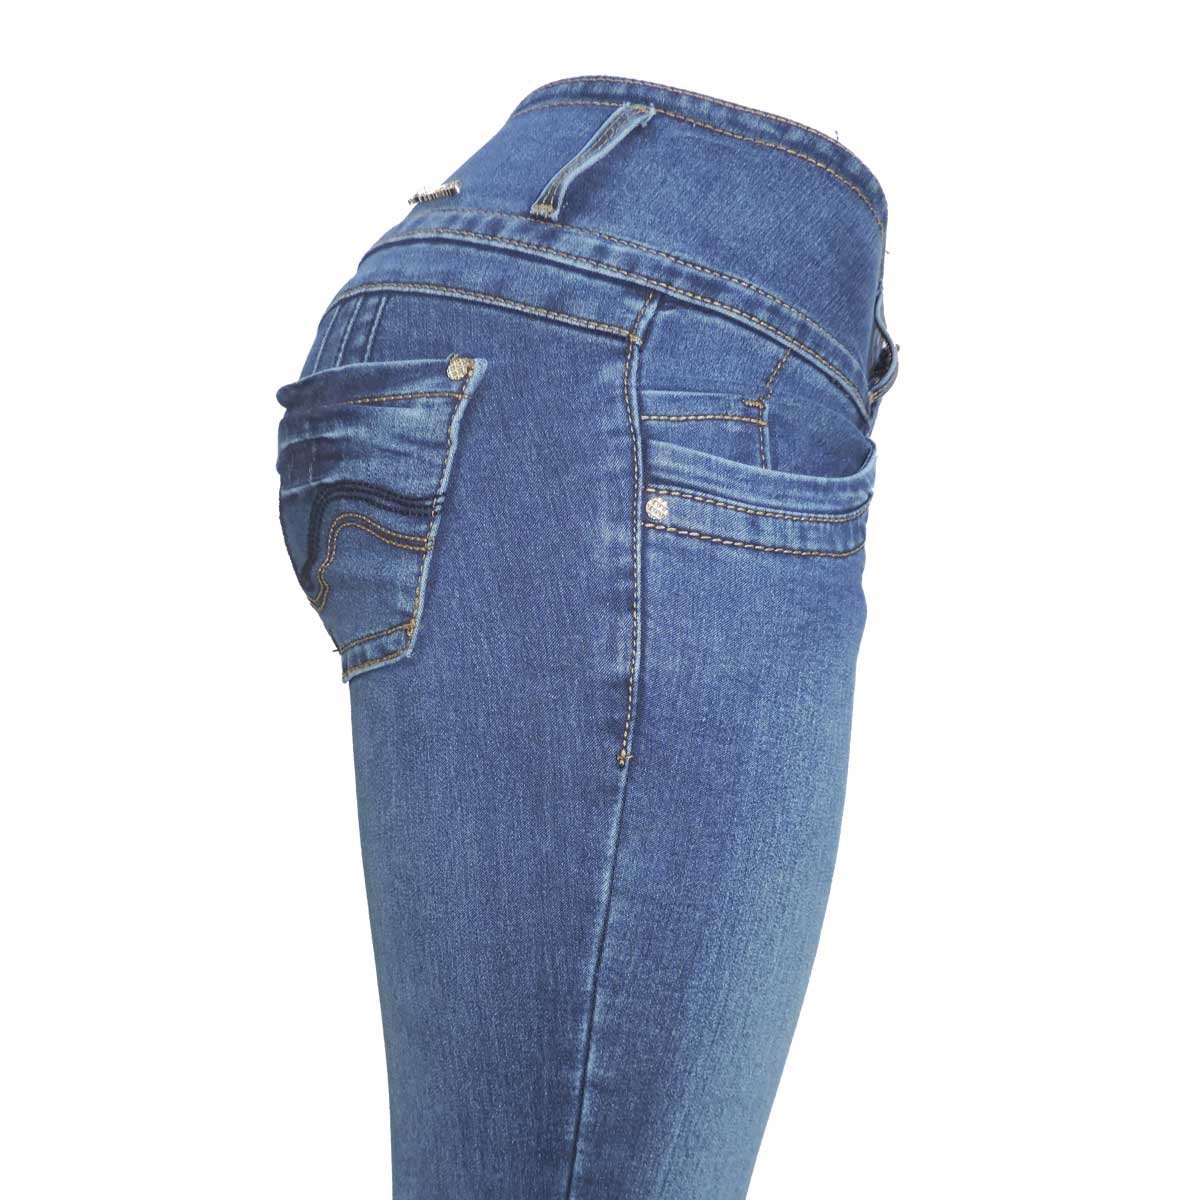 Jeans con Bolsas Bordadas Beronna 401